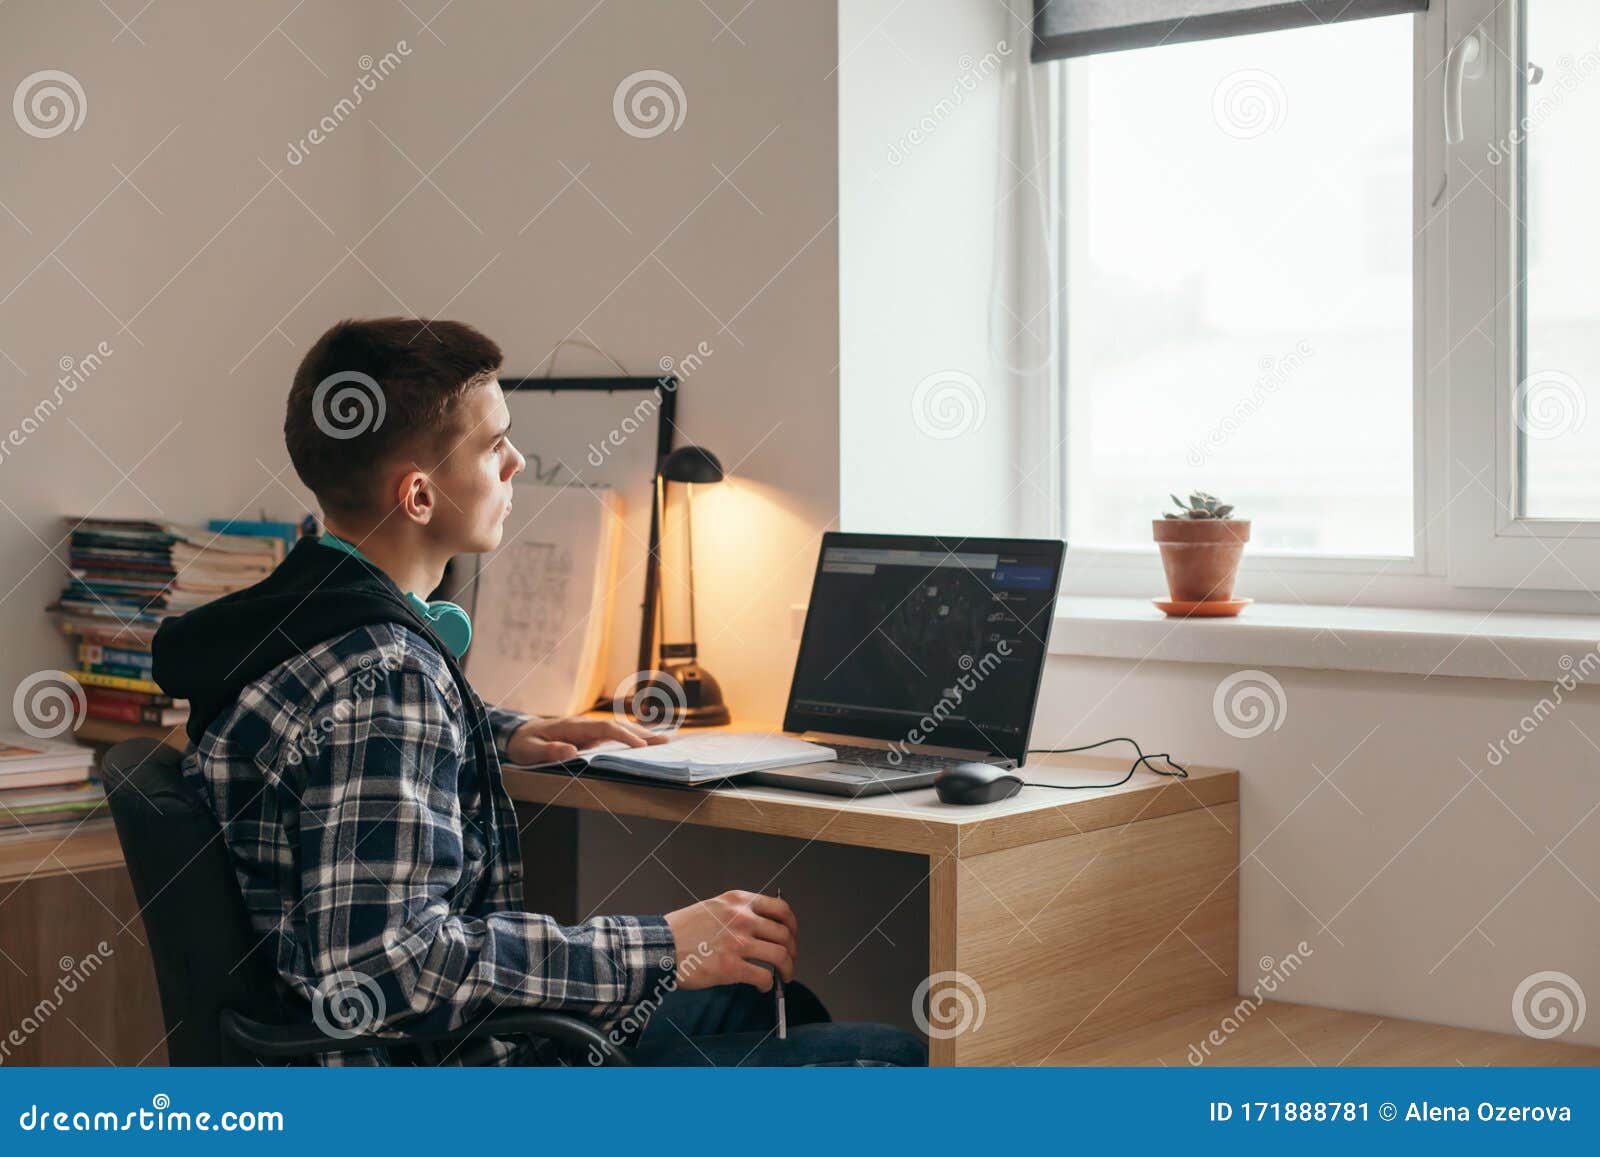 Teenage Boy Doing Homework Using Computer Sitting By Desk In Room